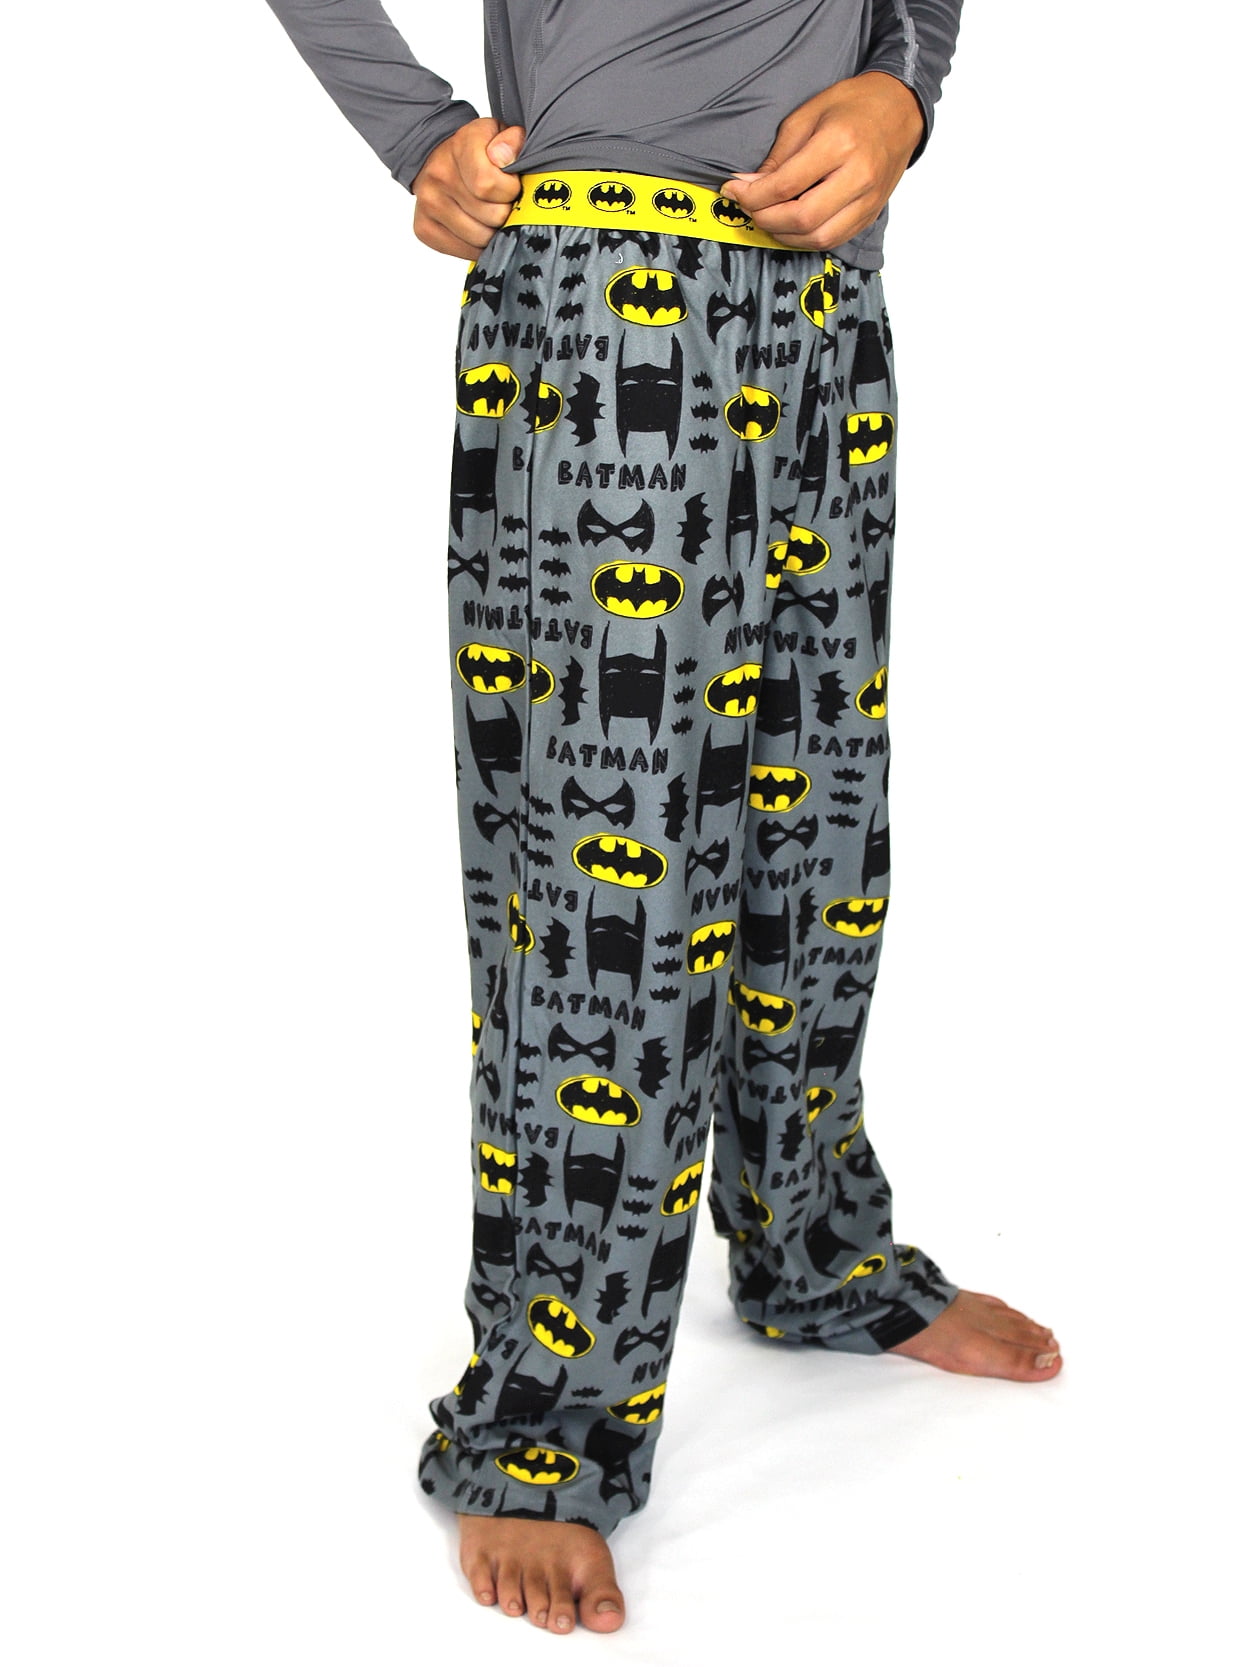 Batman Classic Boys Fleece Pajama Sleep Pants Little Kid/Big Kid 